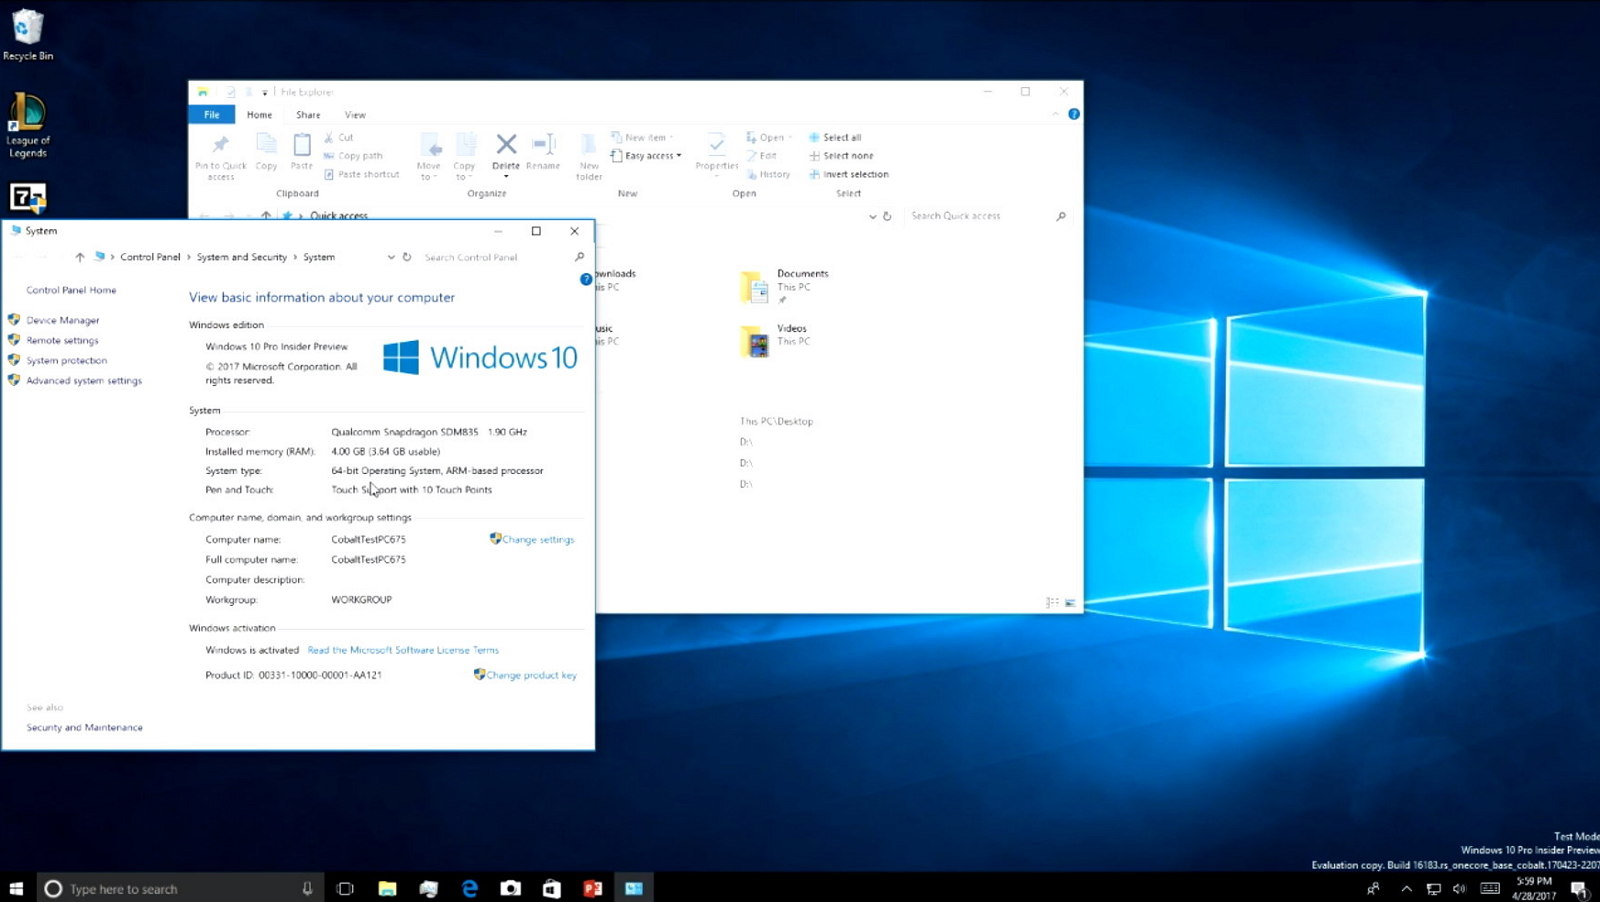 Microsoft Works With Windows 10